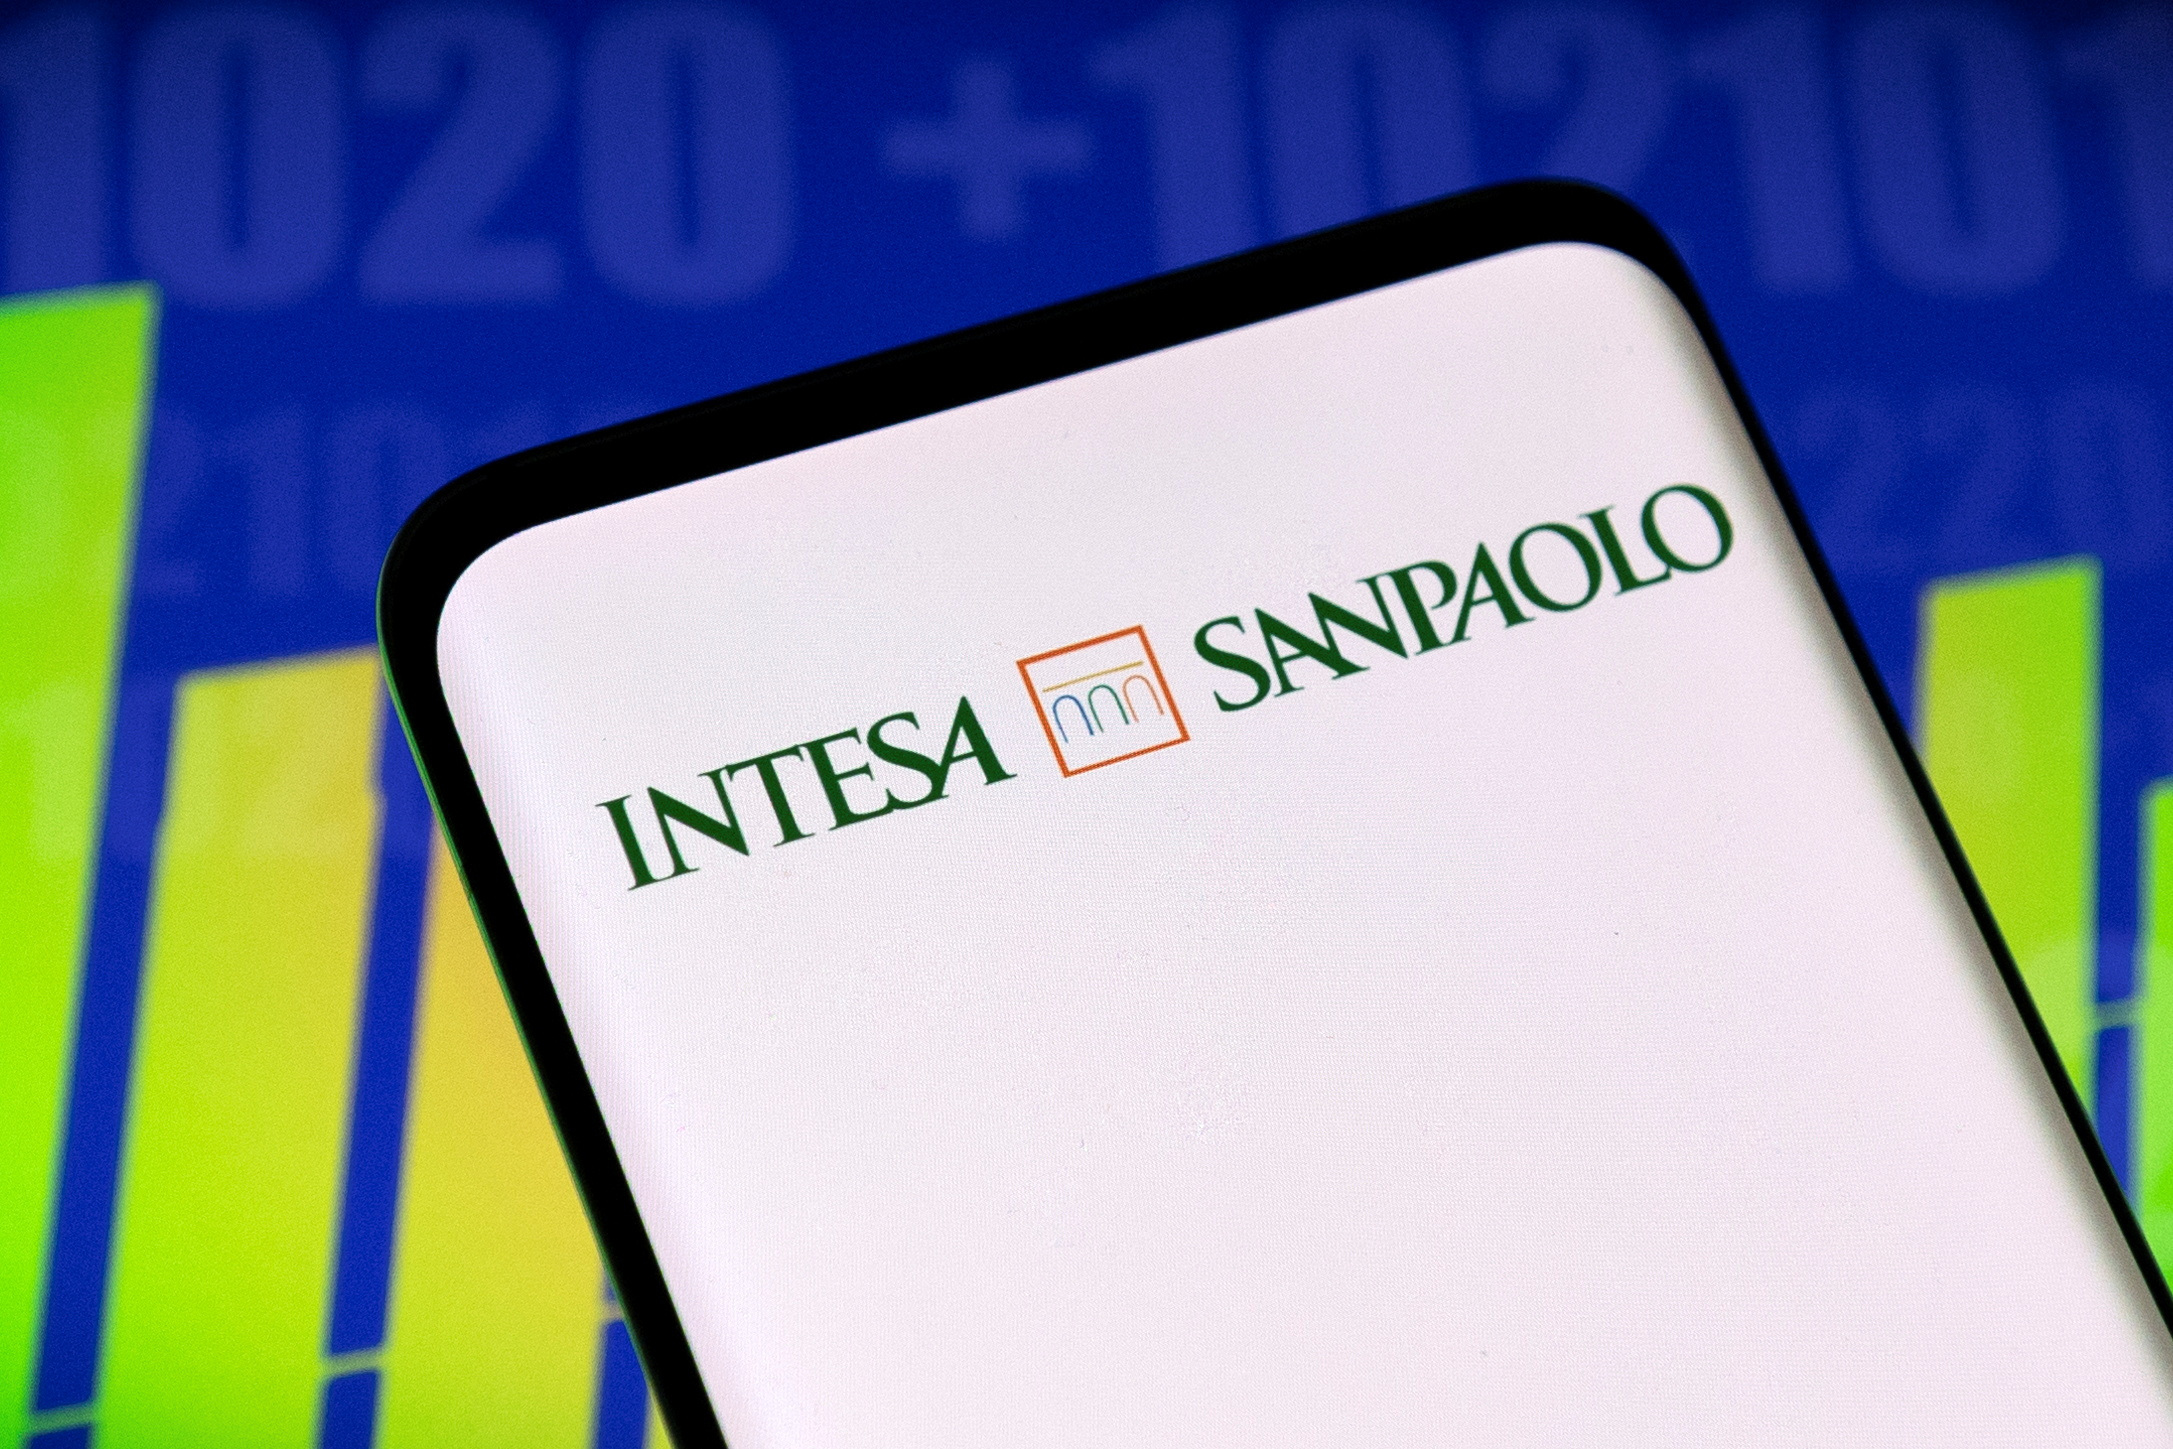 Illustration shows Intesa Sanpaolo bank logo